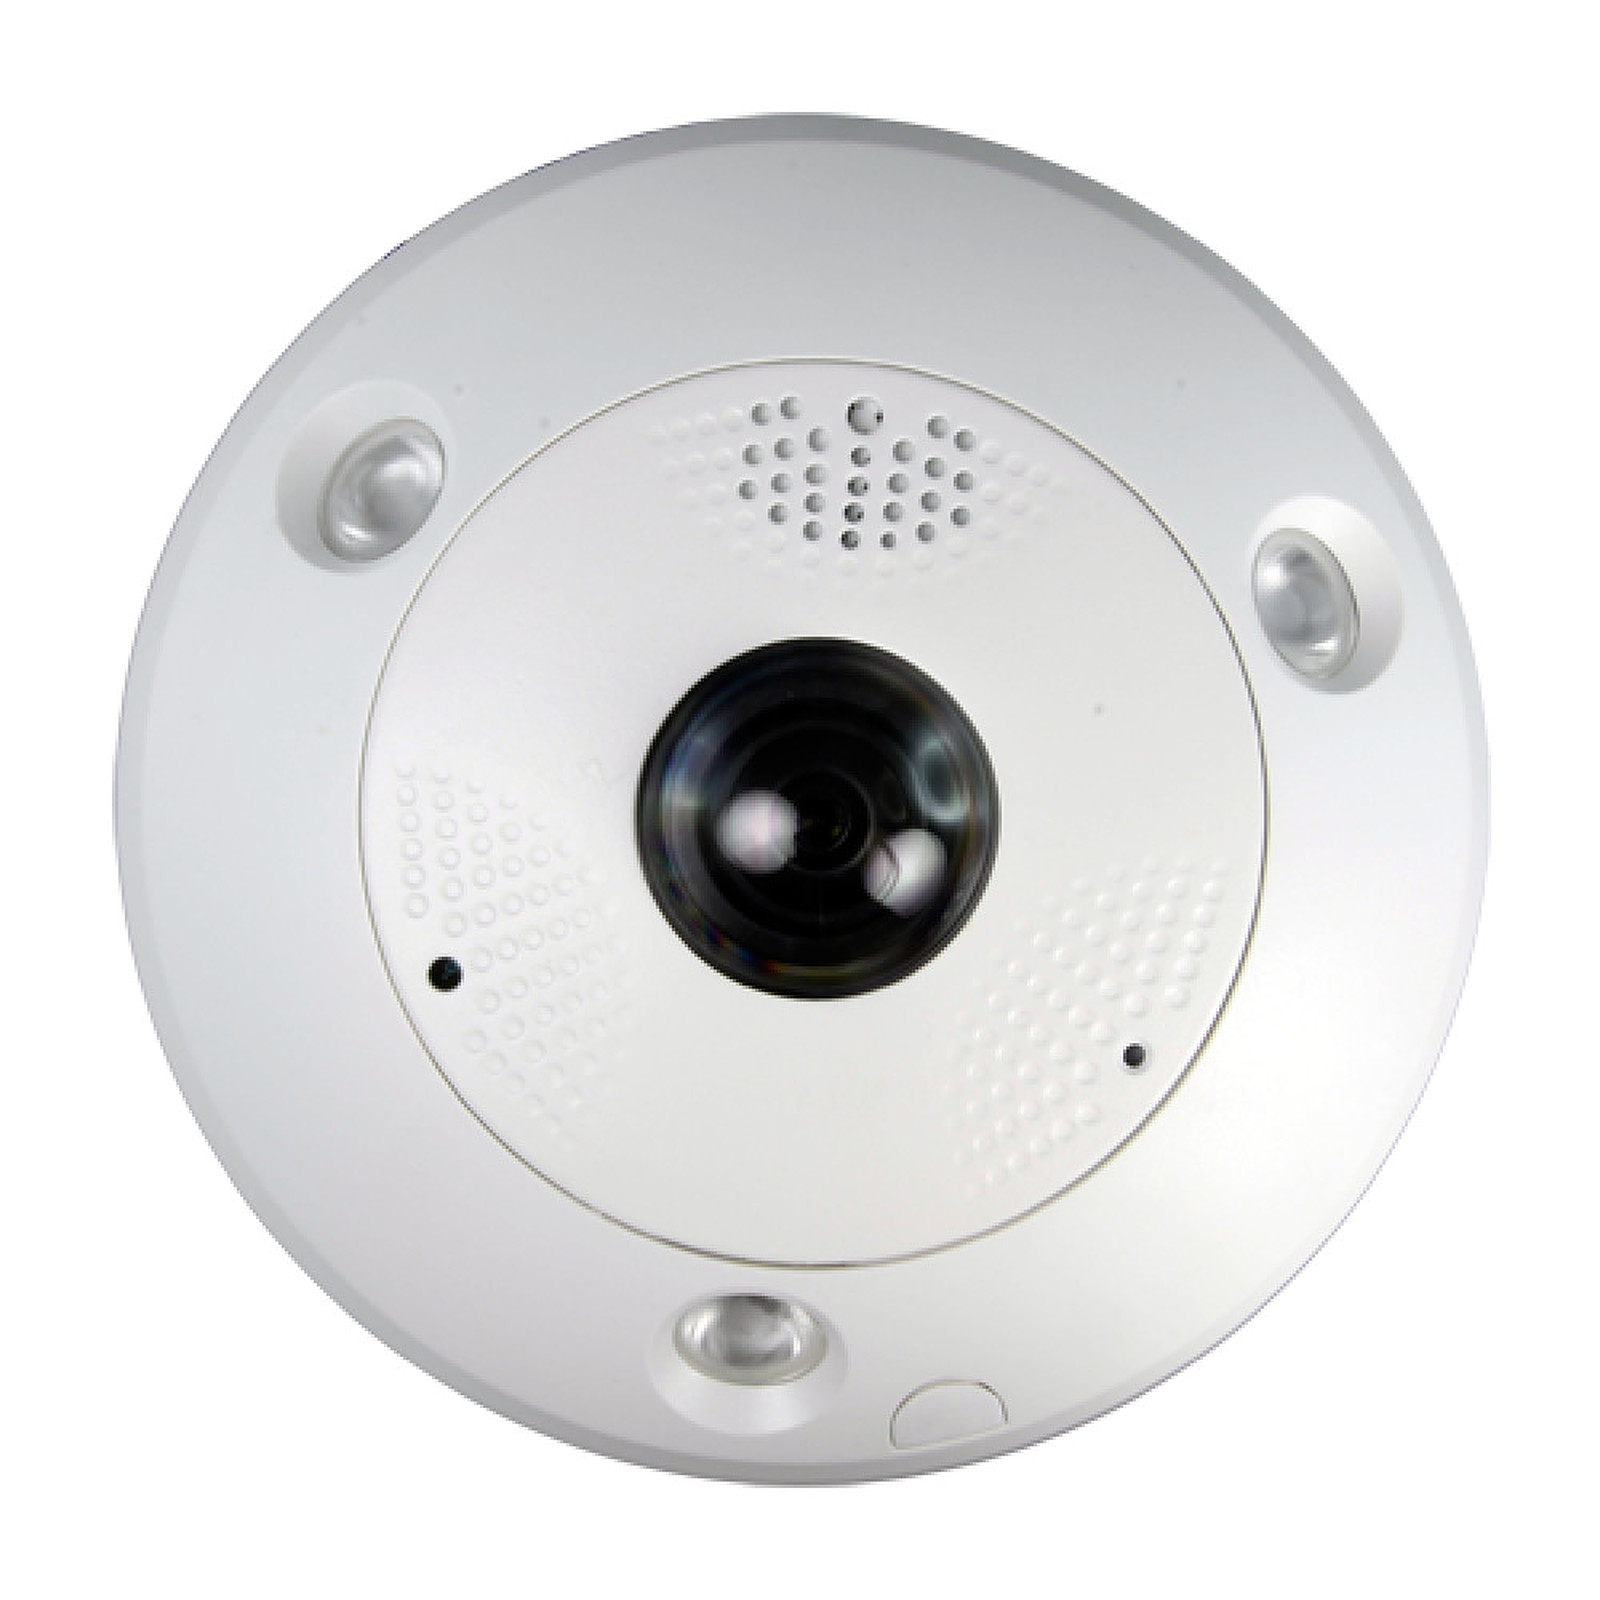 Safire Camera Ip 12 Mpx Avec Rectification Eptz Et Objectif Fisheye SAF_IPDM360-12Y - Camera de surveillance Safire